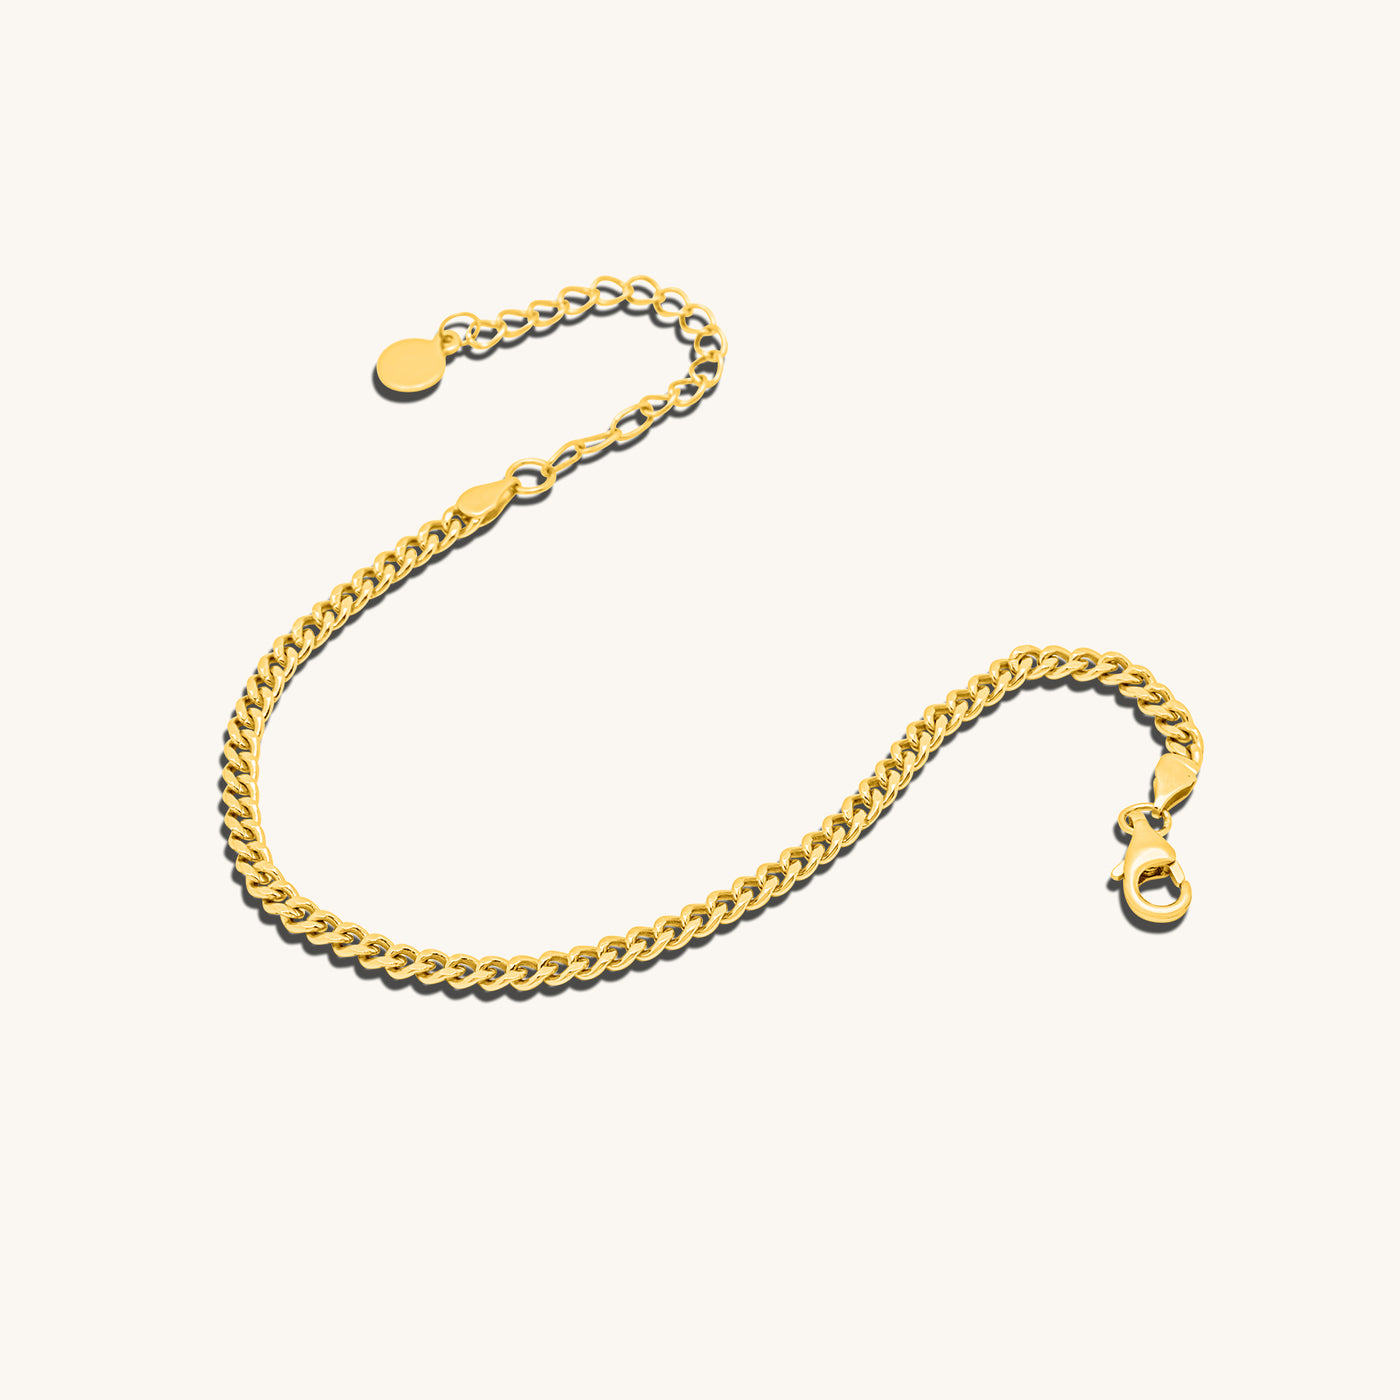 Modern Simple Minimalist Jewelry Women's Bracelet curb chain 3mm 18k Gold Layered on 925 Sterling Silver  